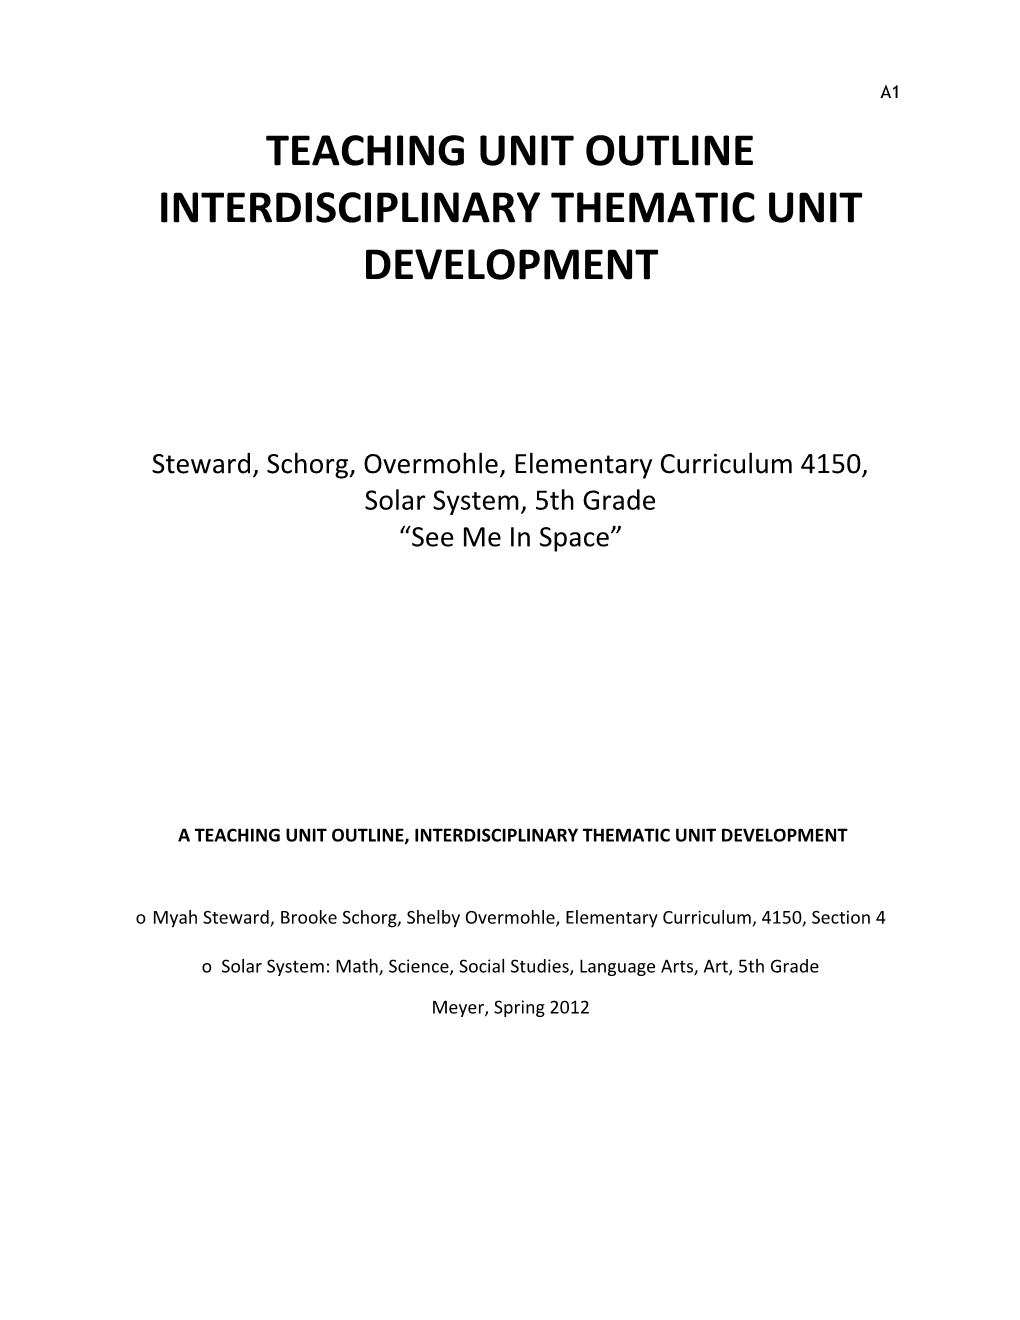 Interdisciplinary Thematic Unit Development